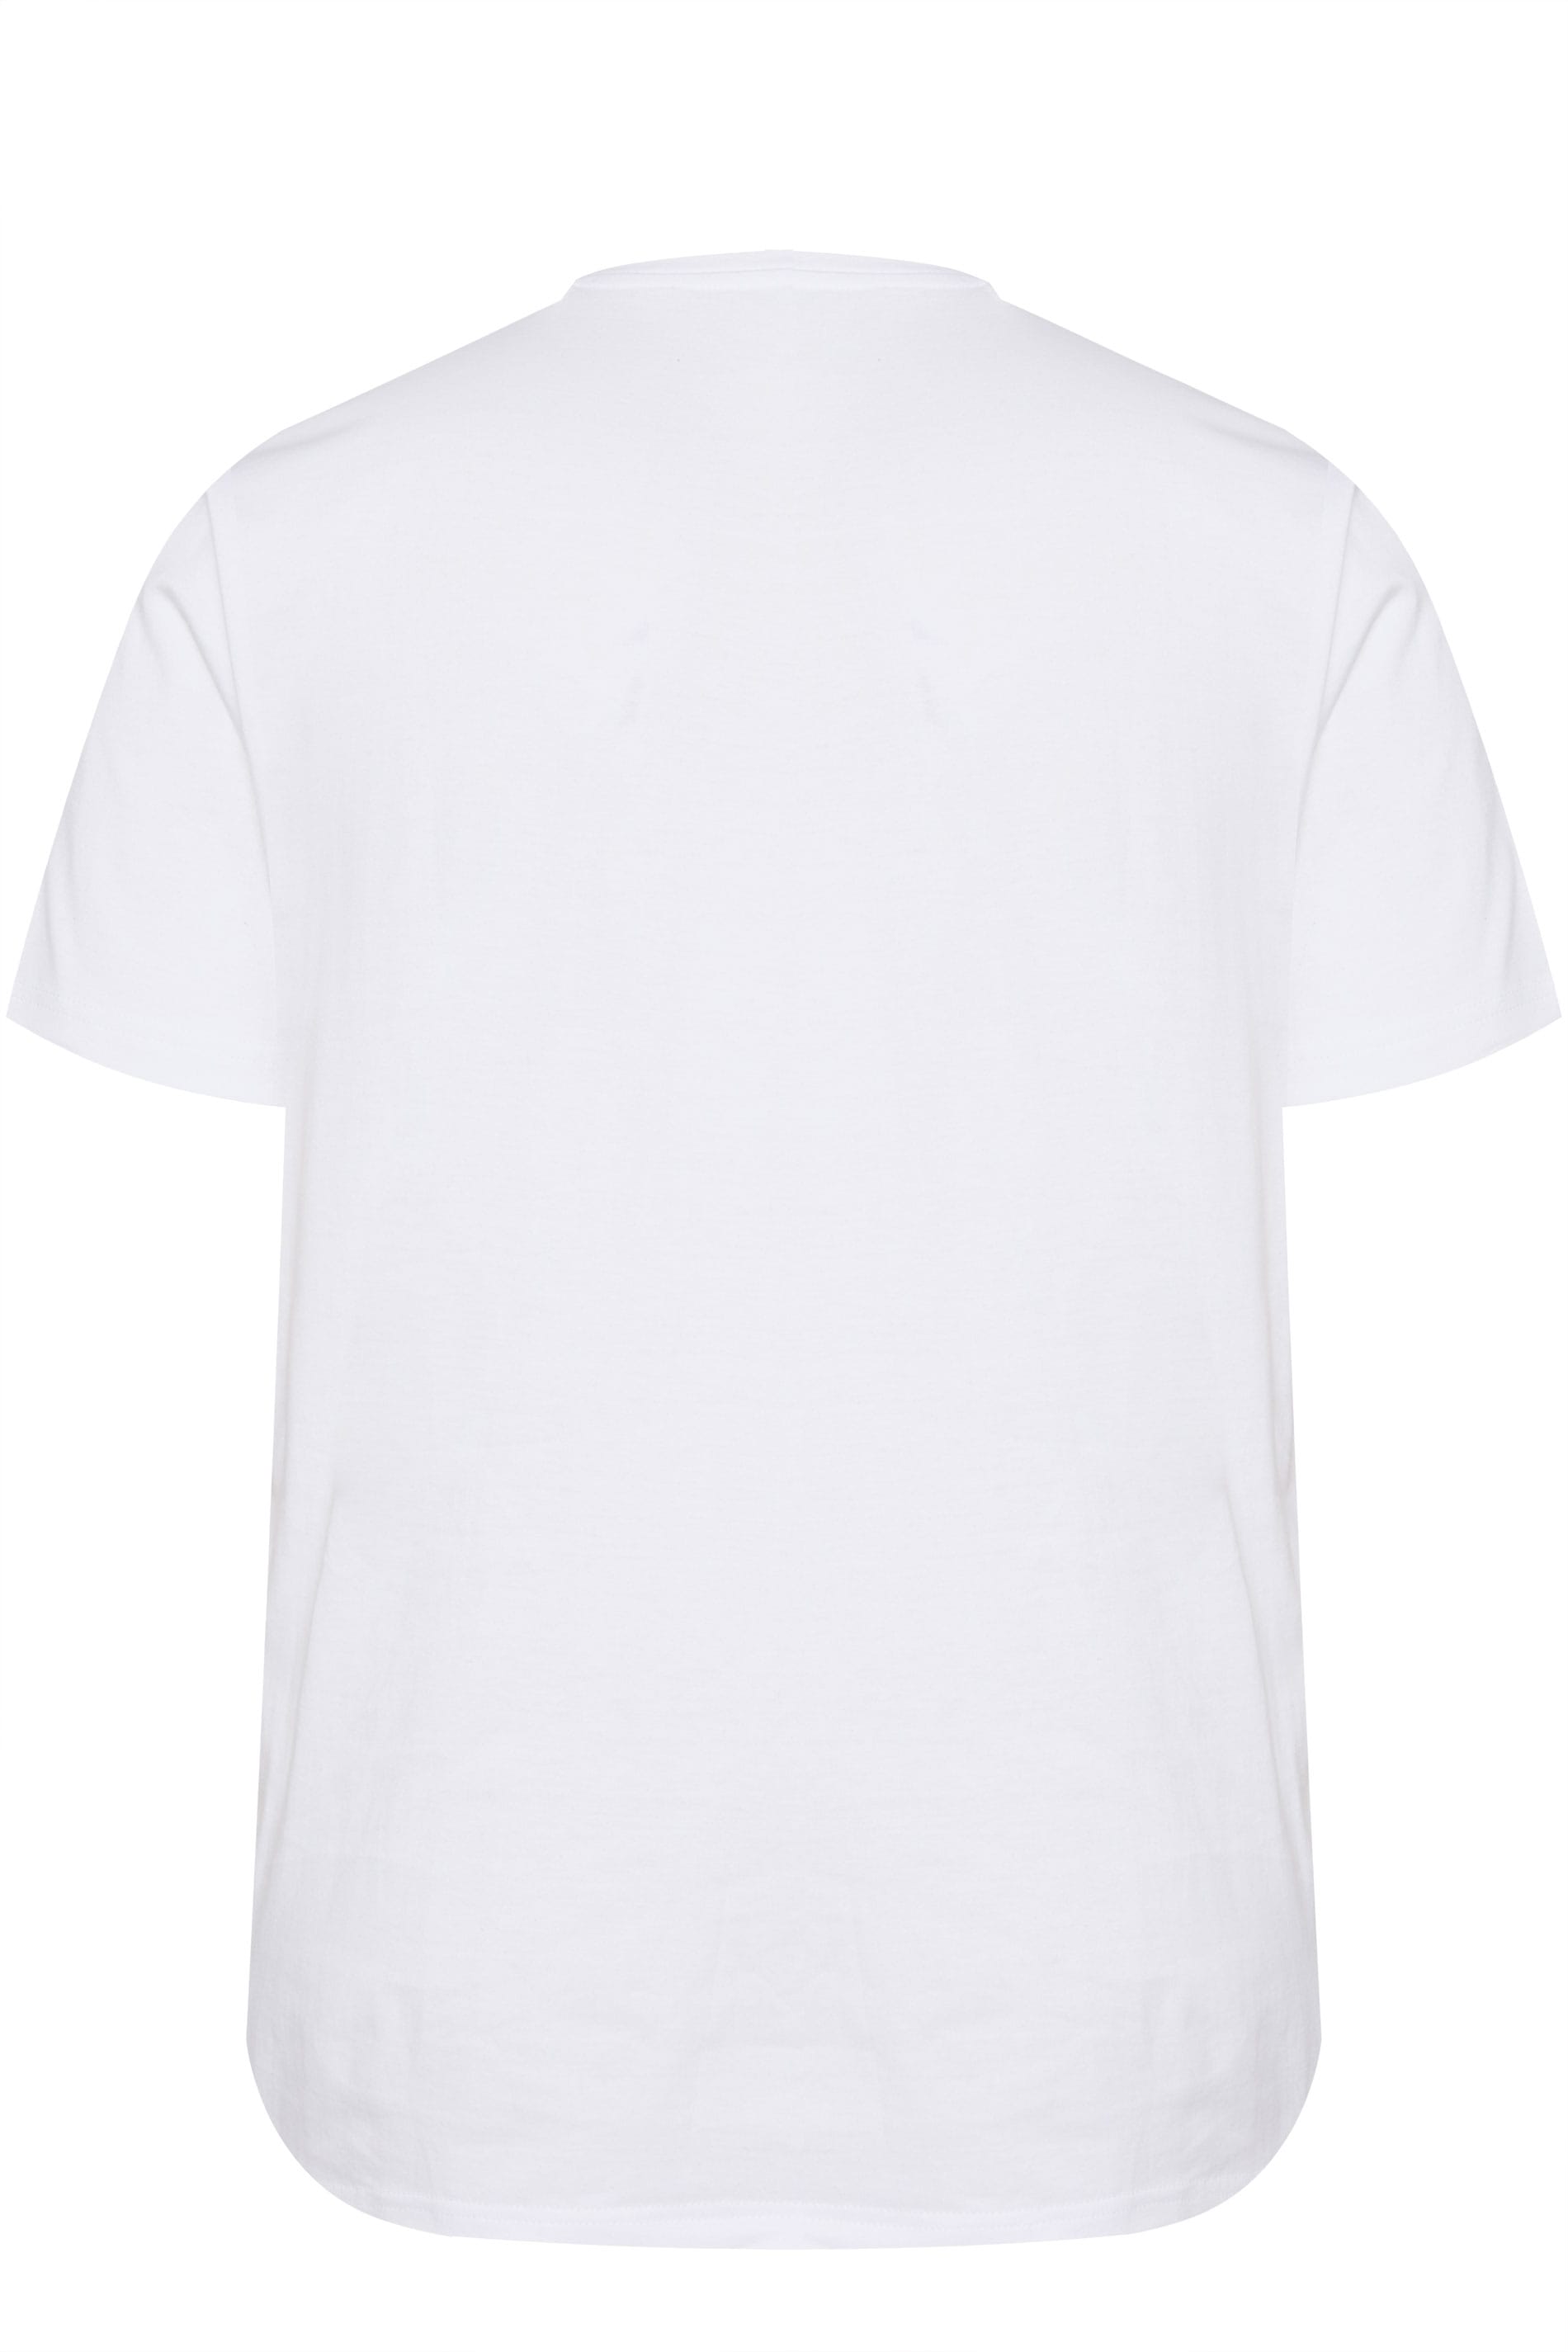 BadRhino Plain White Crew Neck T-Shirt | Sizes M to 8XL | BadRhino